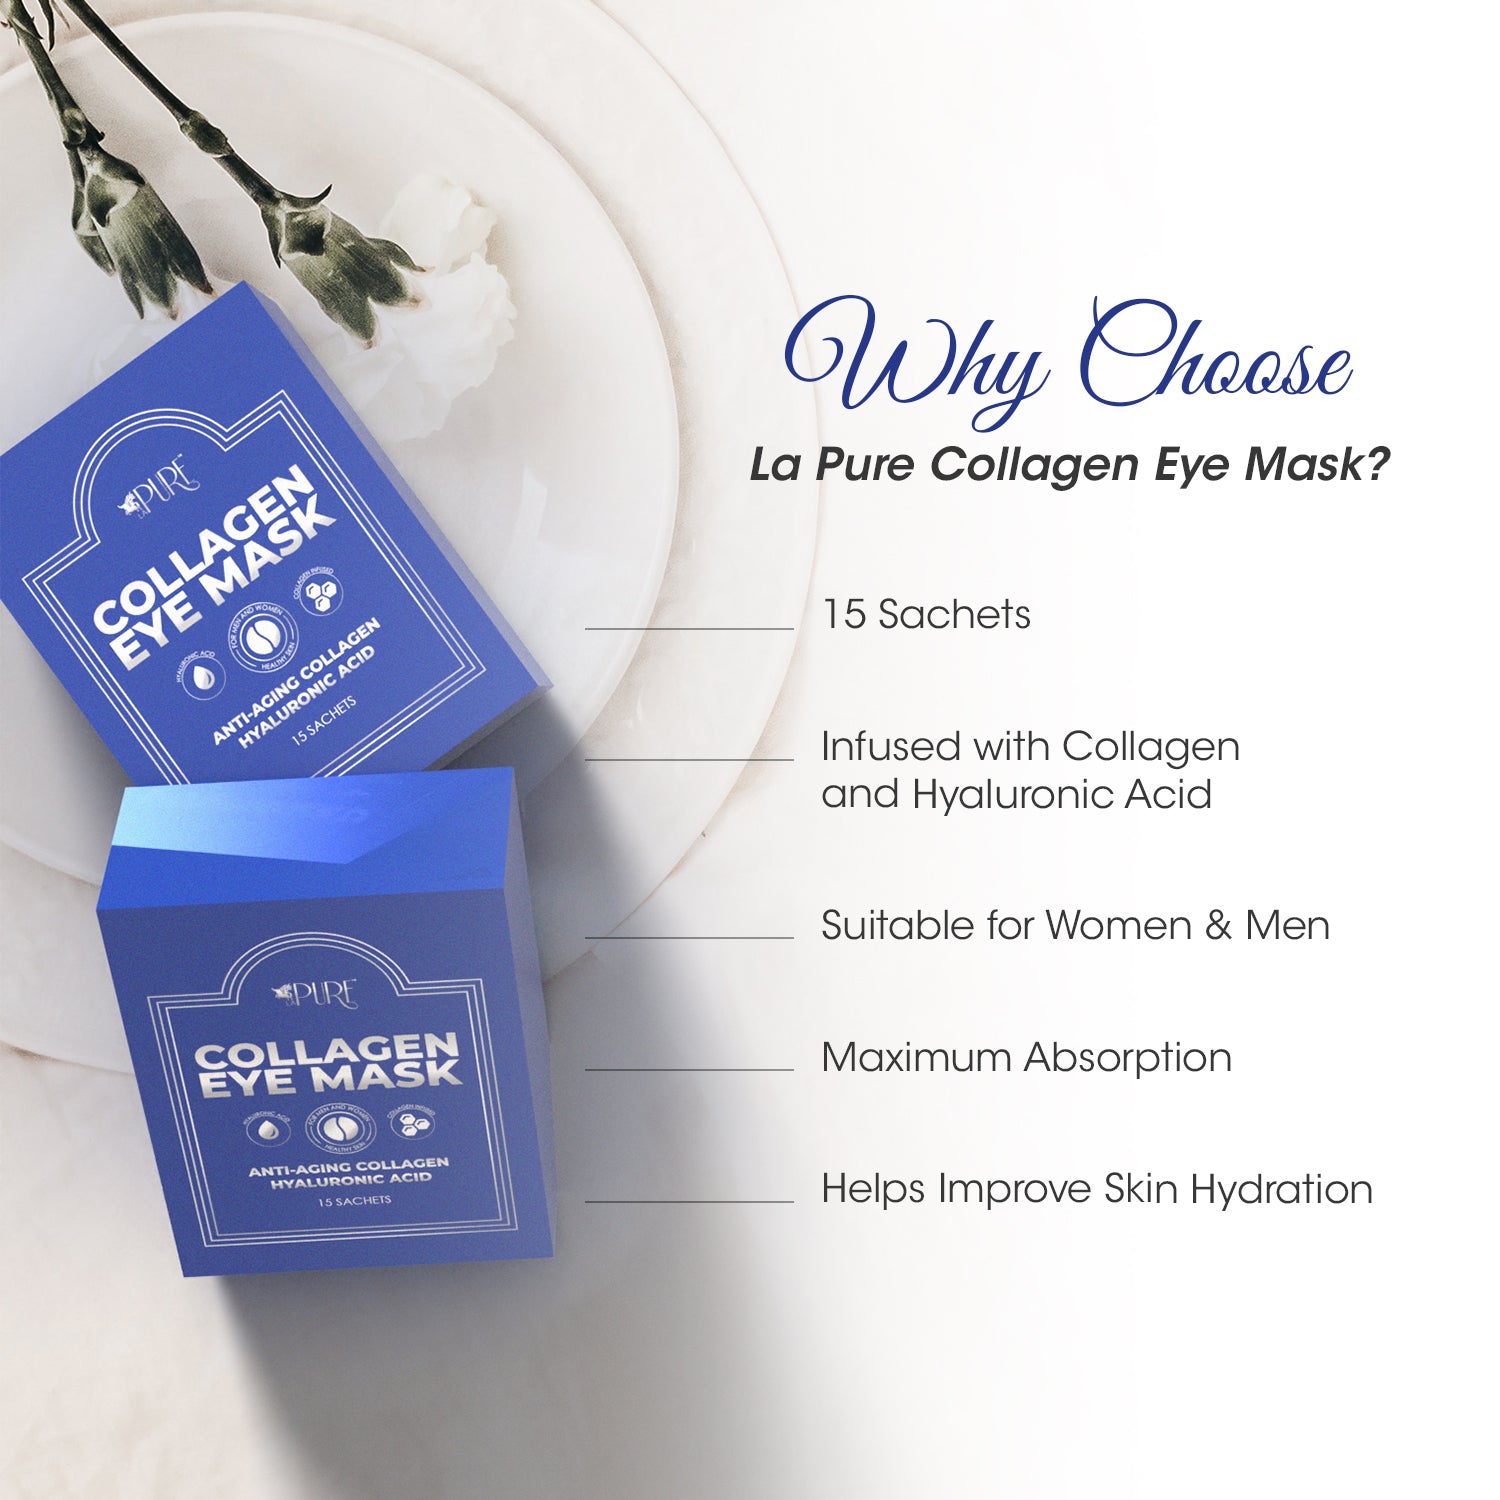 Why choose Collagen Eye Mask